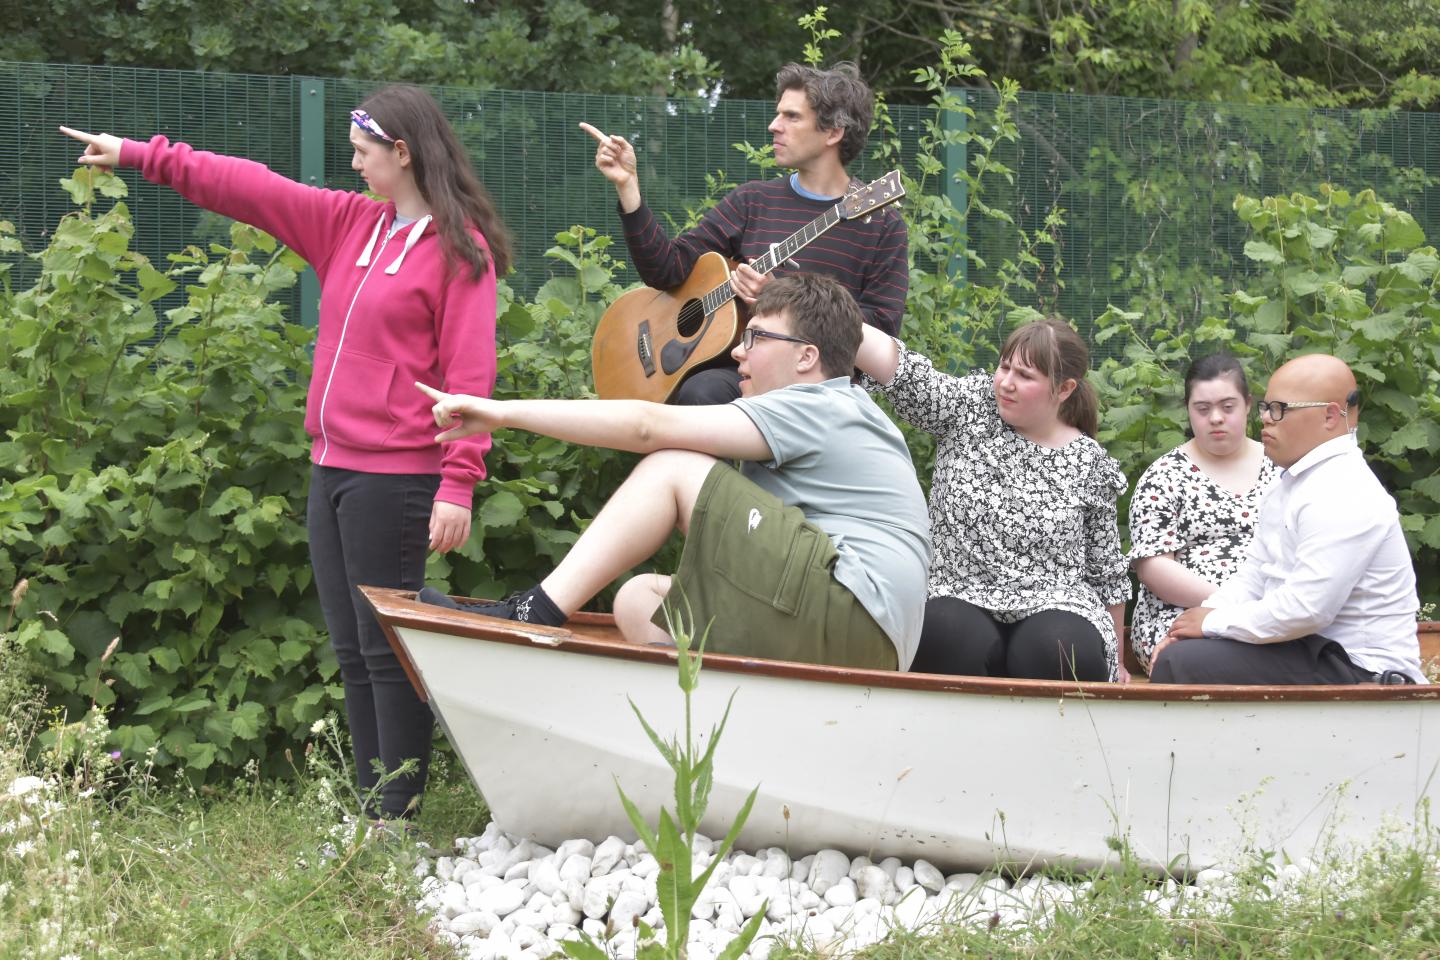 Members of the Sensory Social Club having fun in a boat